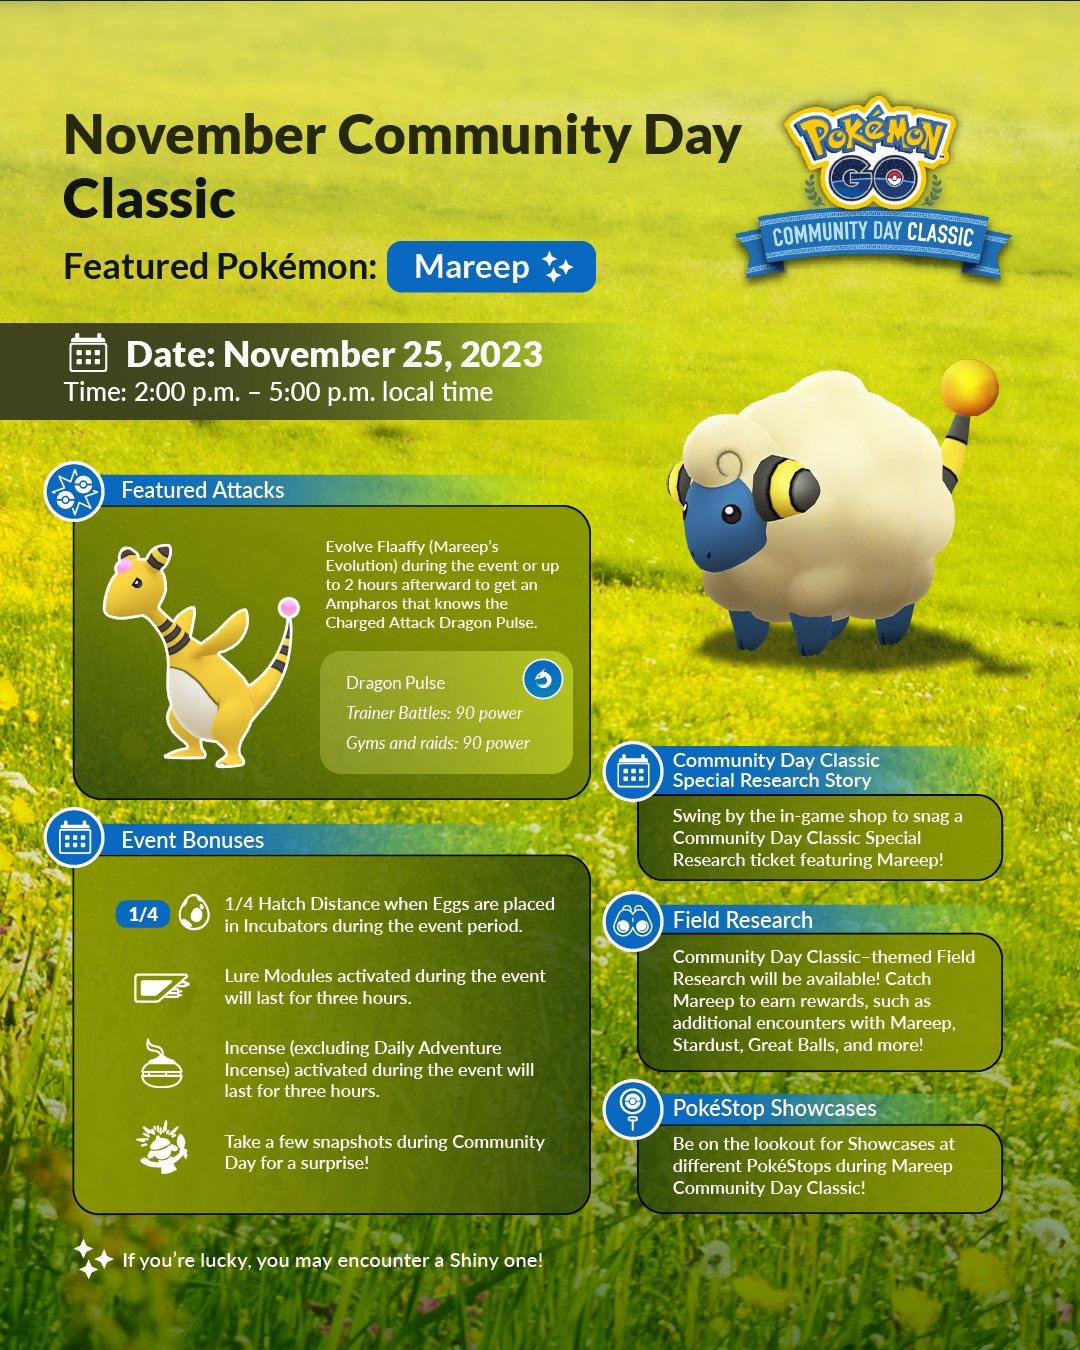 Community Day Classic - Mareep - Infographic